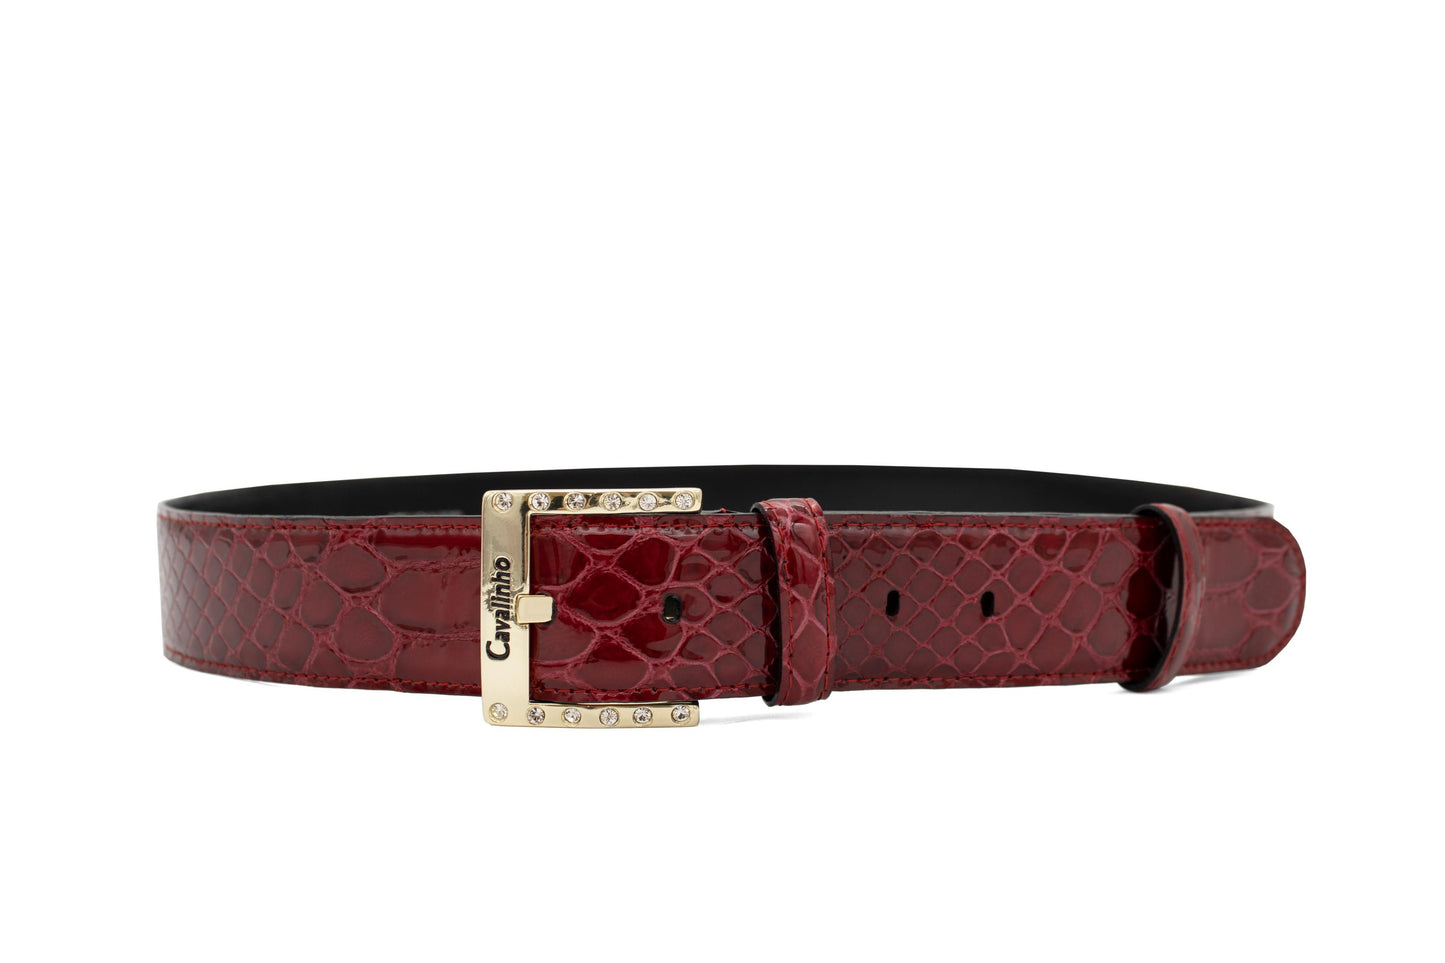 Cavalinho Classic Patent Leather Belt - DarkRed Gold - 58010808.04_1